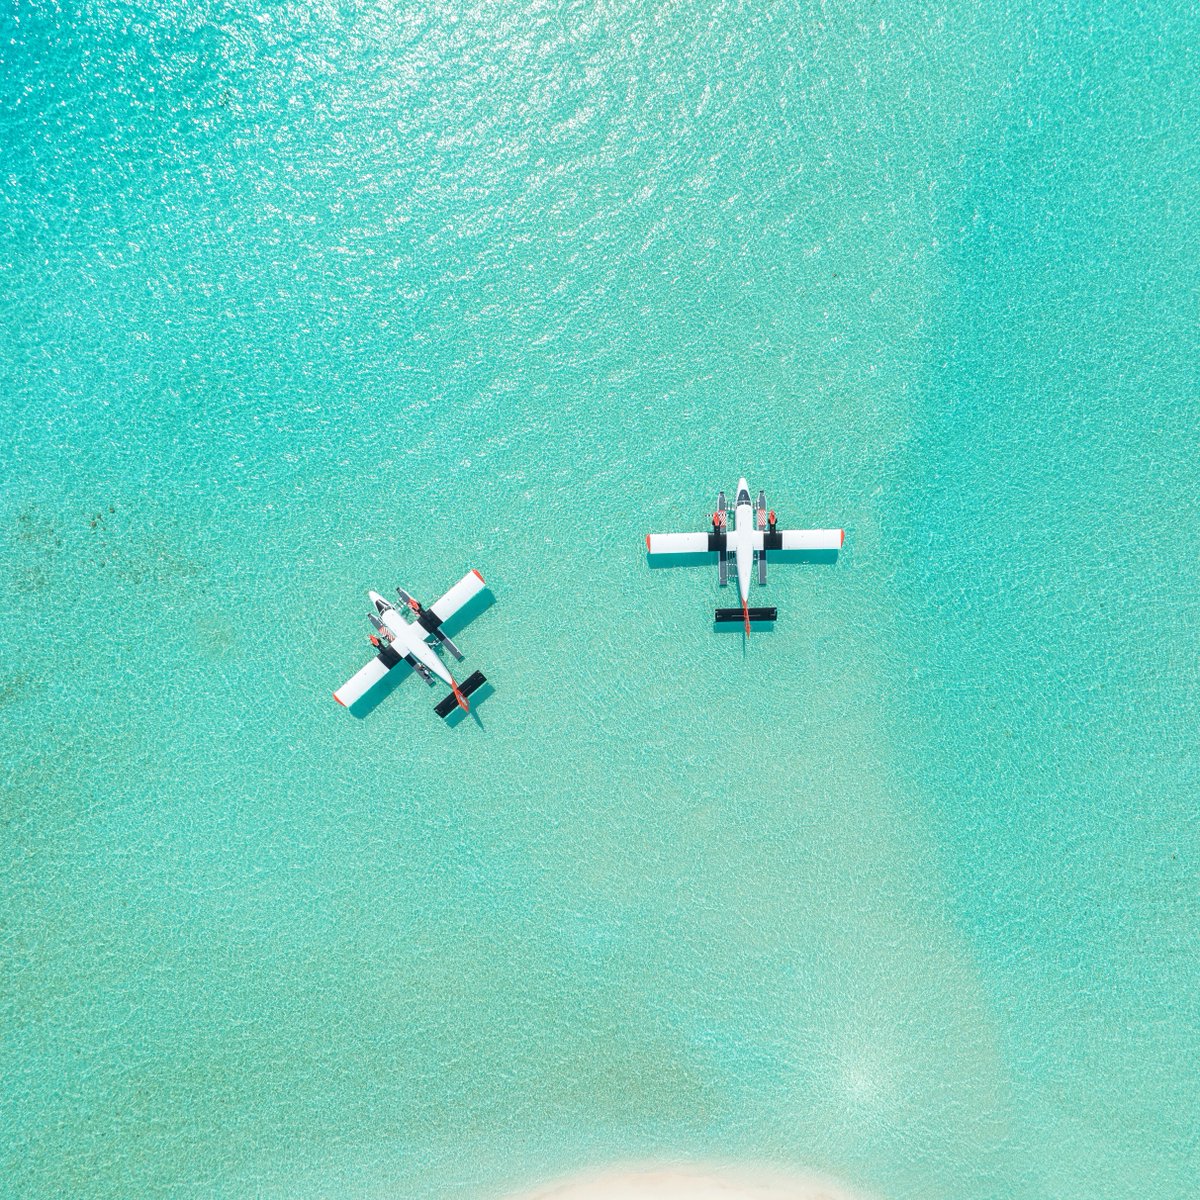 Let love take flight this Valentine's Day ✈️🩷 #TMAexperience #TravelConfidentlyWithTMA #TwinOtter #Seaplane #Maldives #VisitMaldives #Aviation #Aviators #FloatPlan #ValentinesDay #CelebrateLove